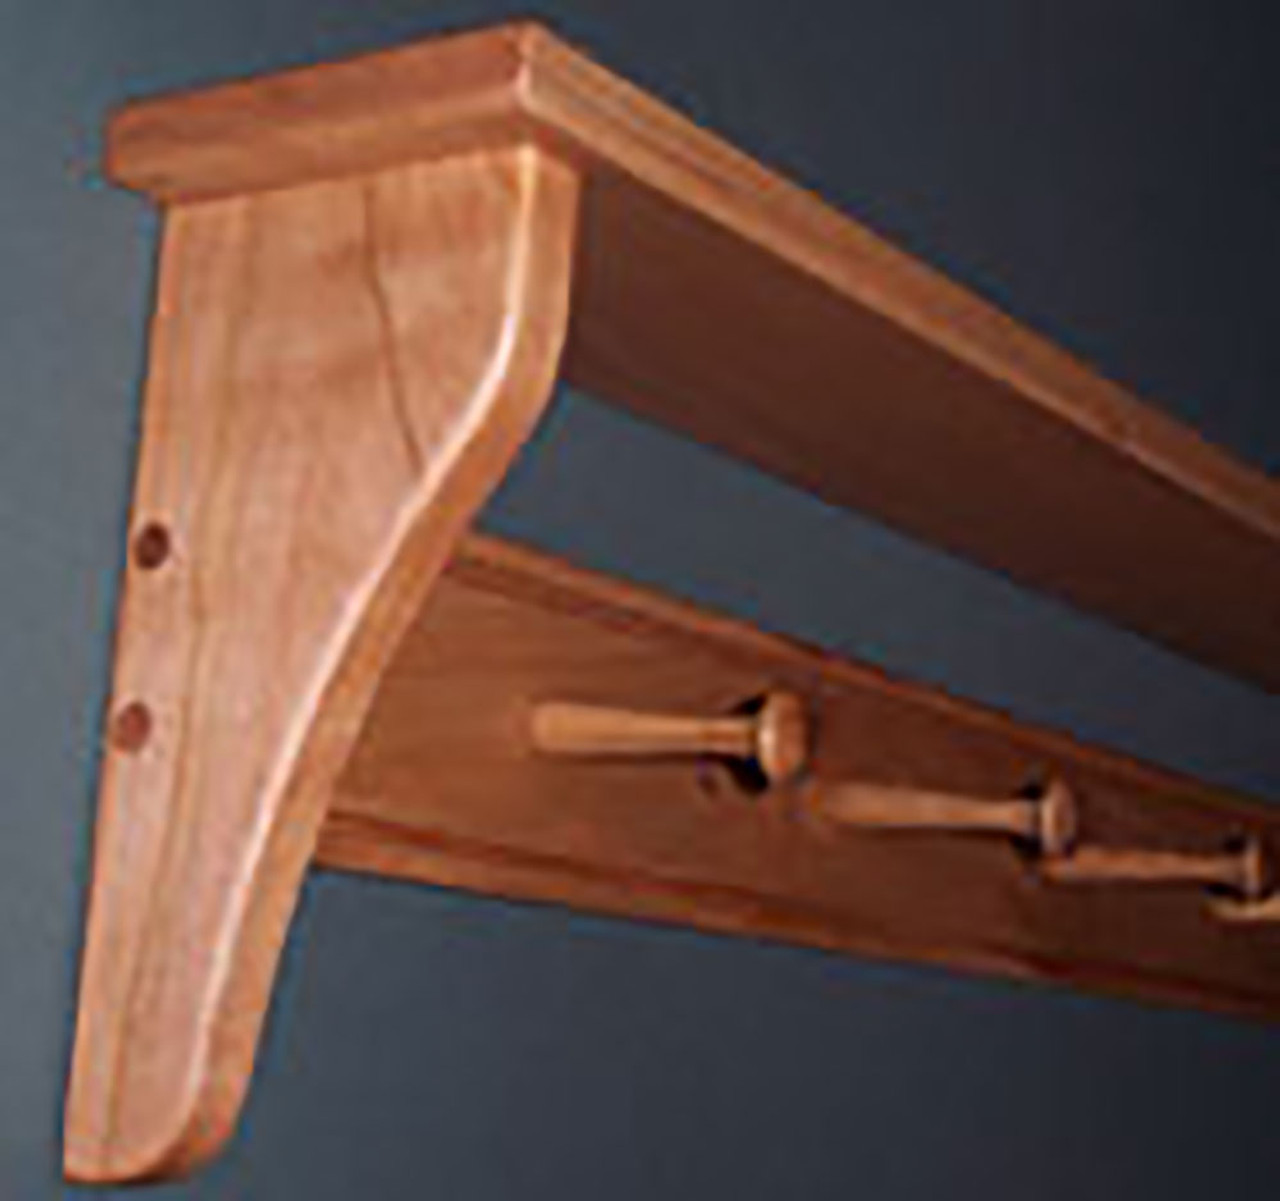 Oak Shaker Peg Rail Shelf - Shaker Scandi Style Peg Shelf Hooks 2 Sizes